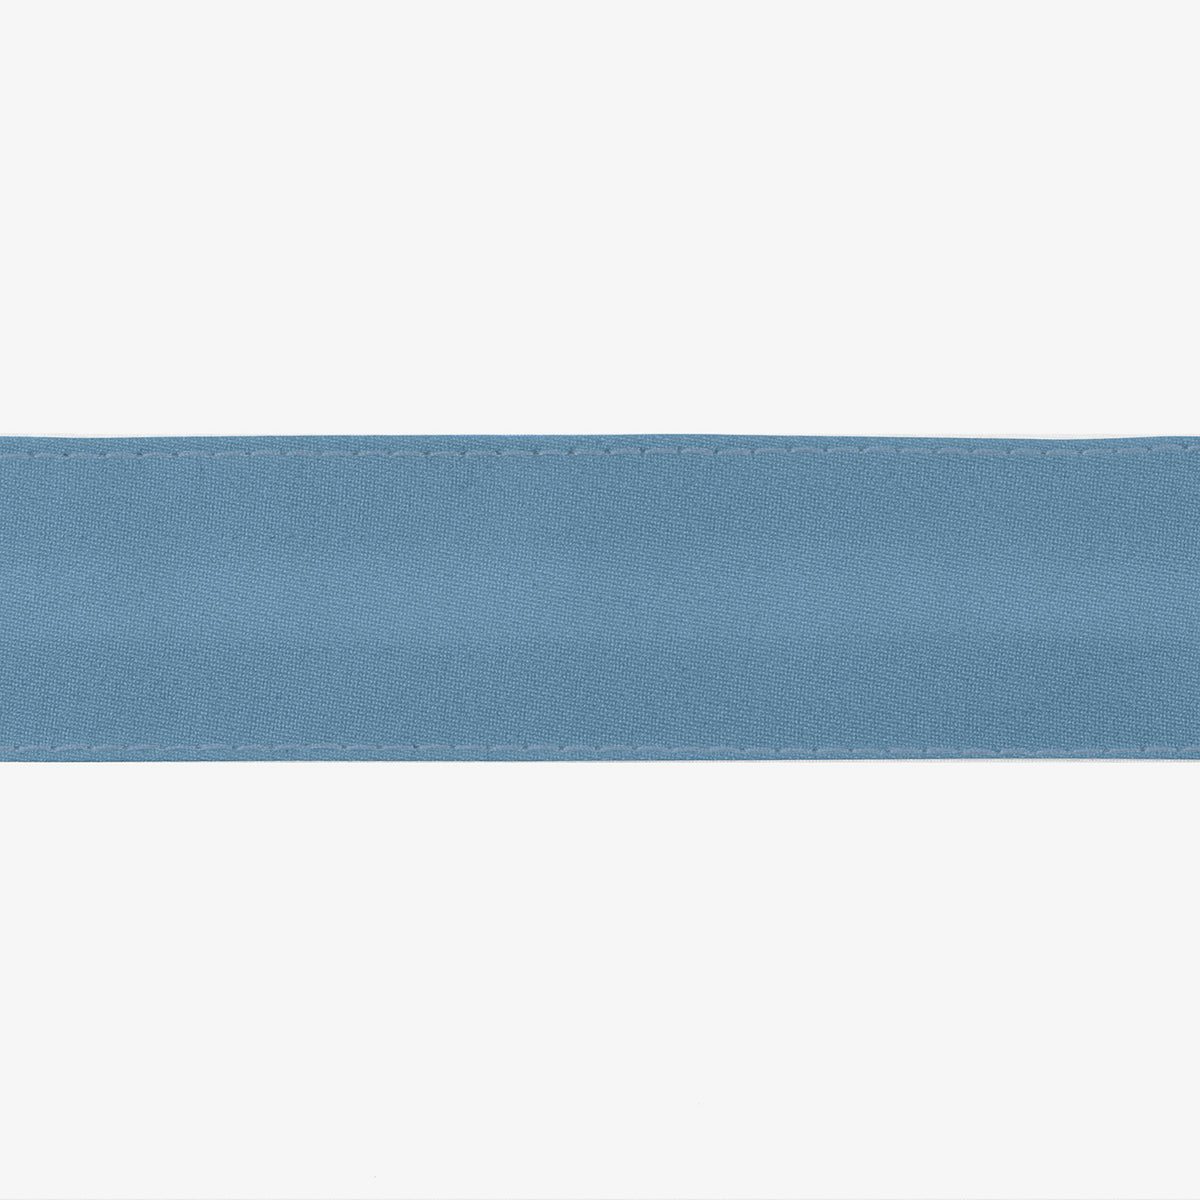 Matouk Lowell Tissue Box Cover Fine Linen Swatch - Blue